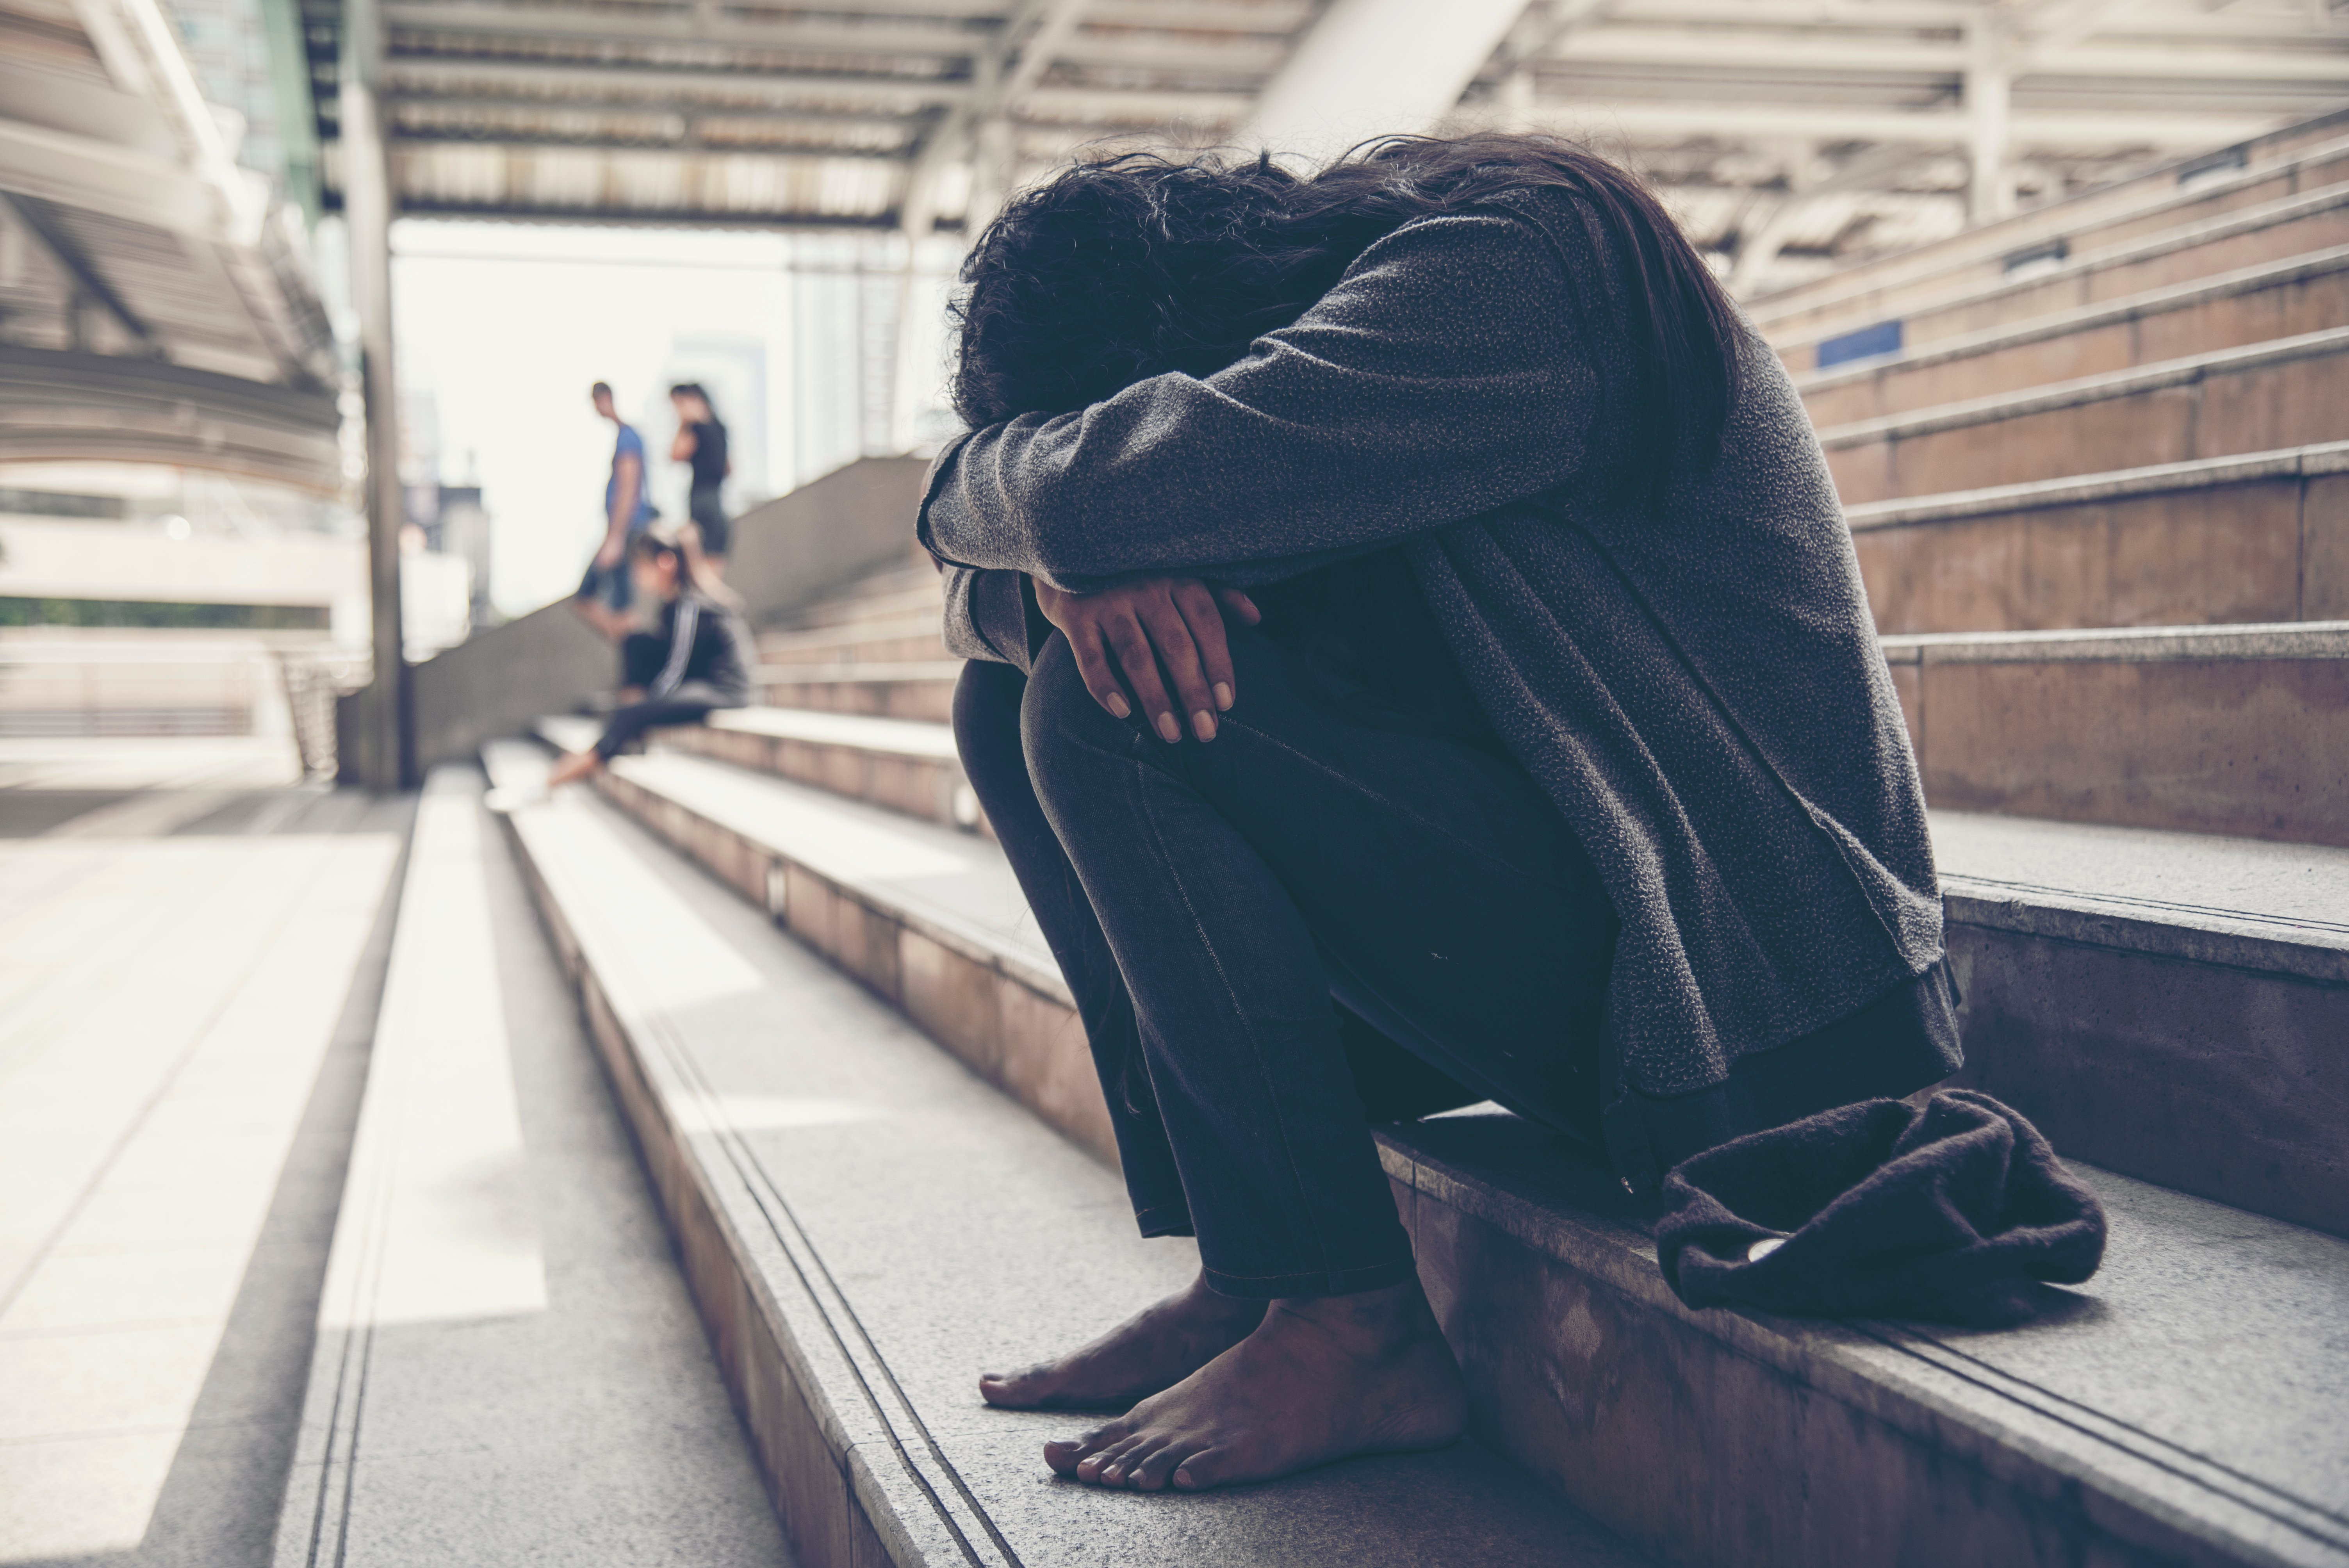 Hombre sin hogar. | Foto: Shutterstock